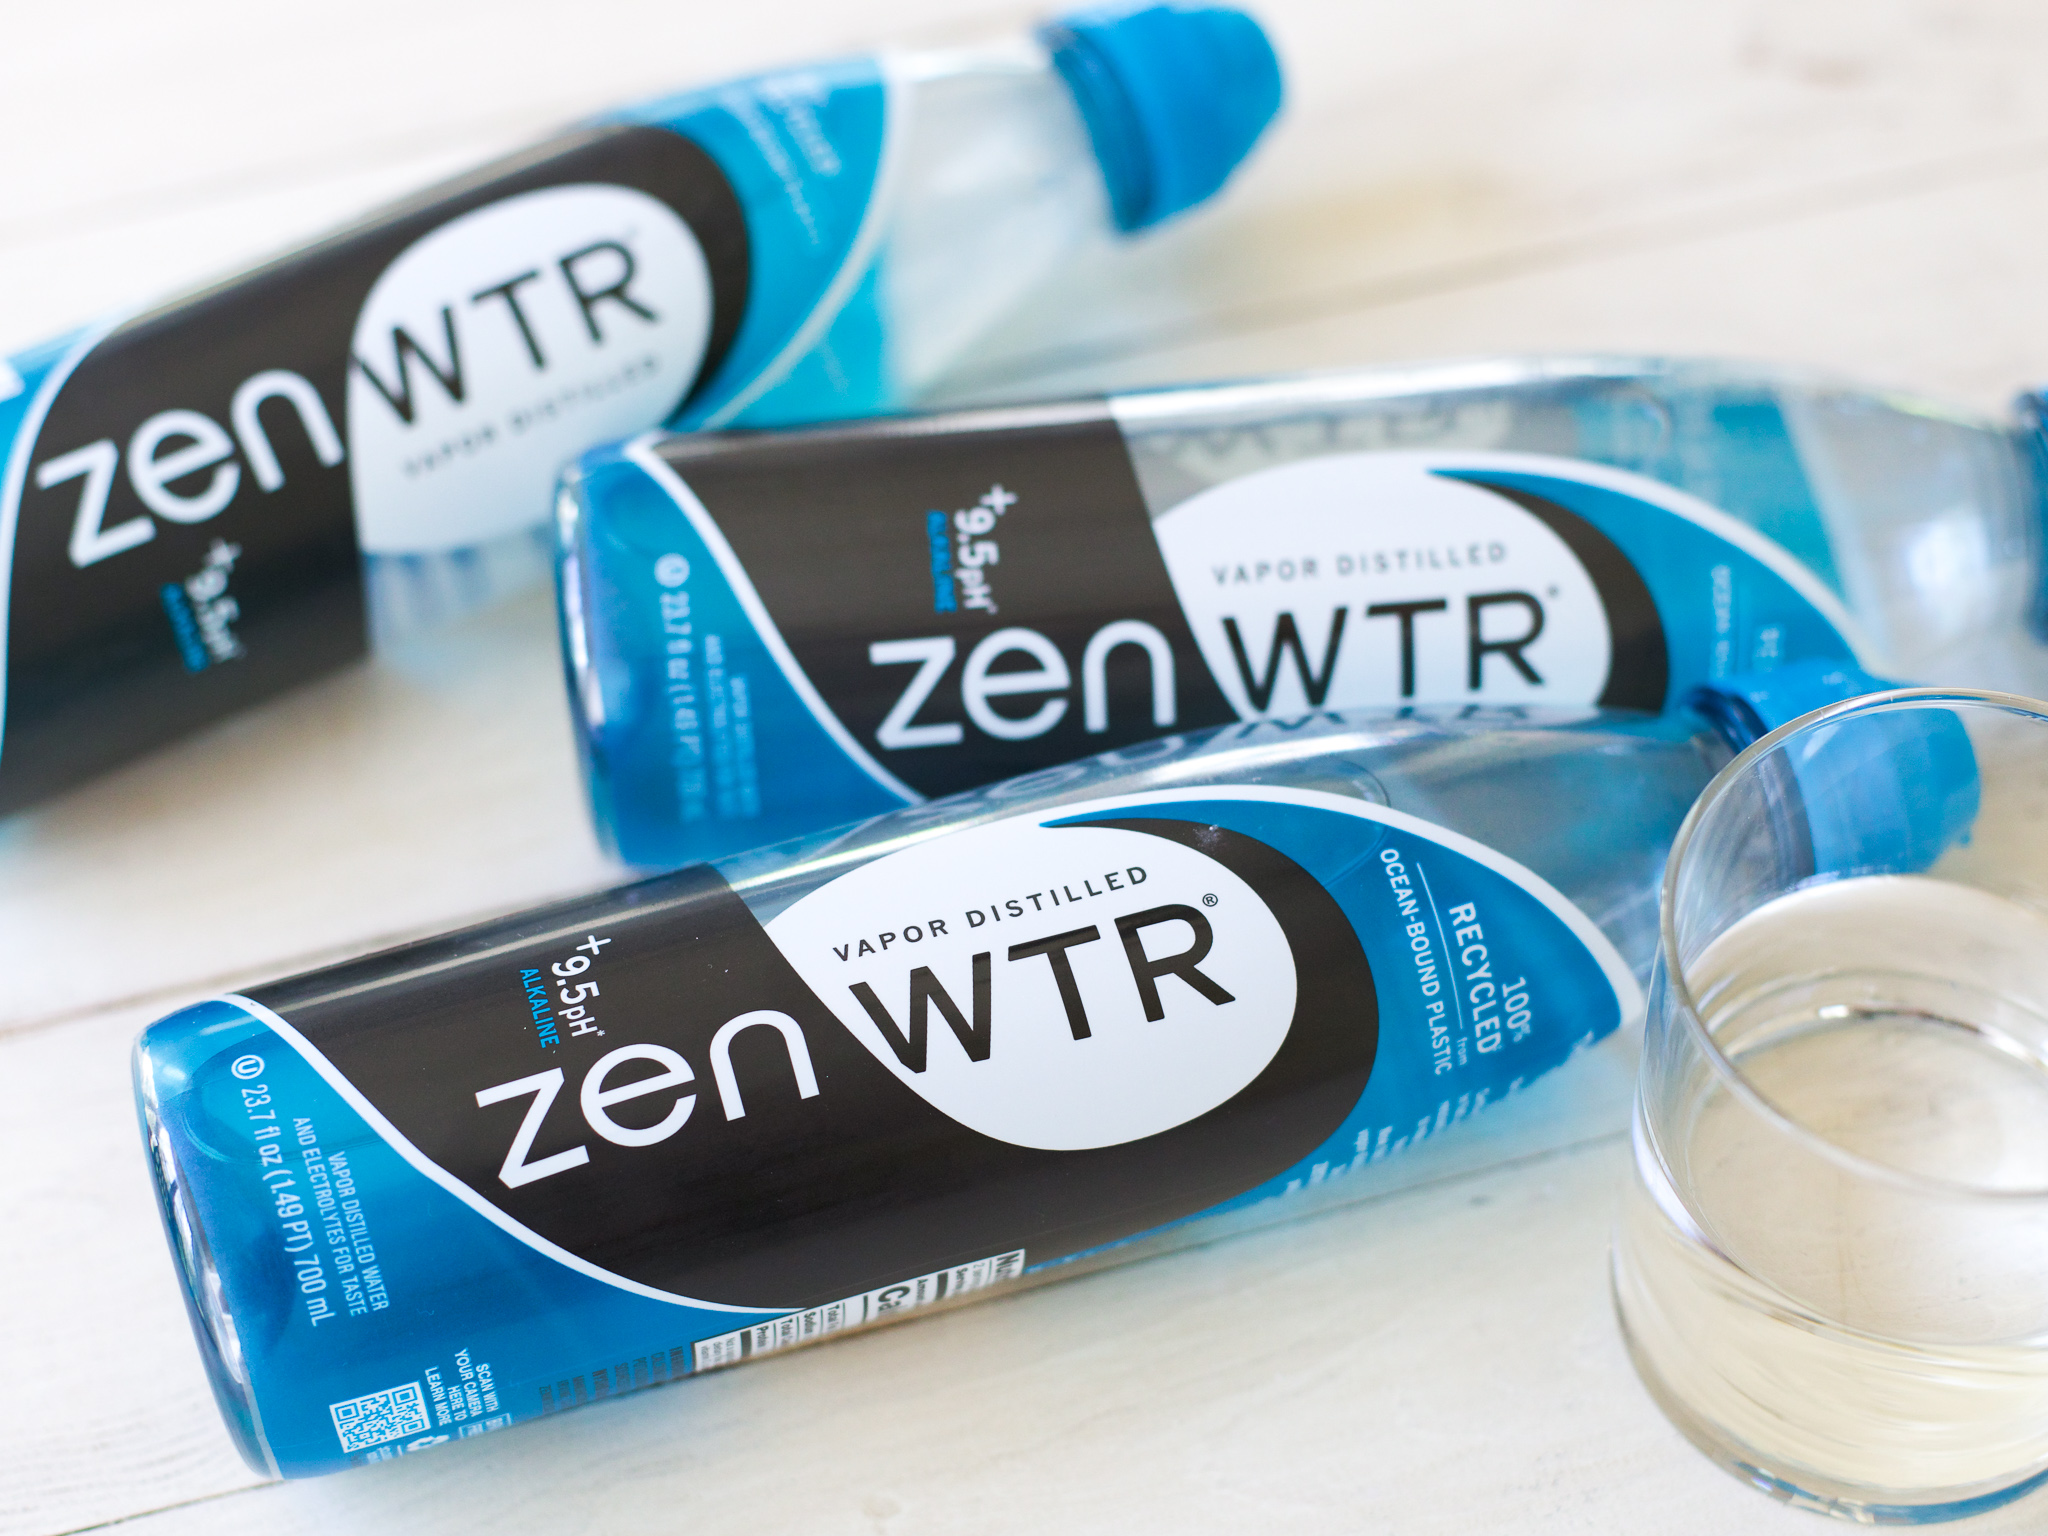 ZenWTR Just $1.17 Per Bottle At Publix